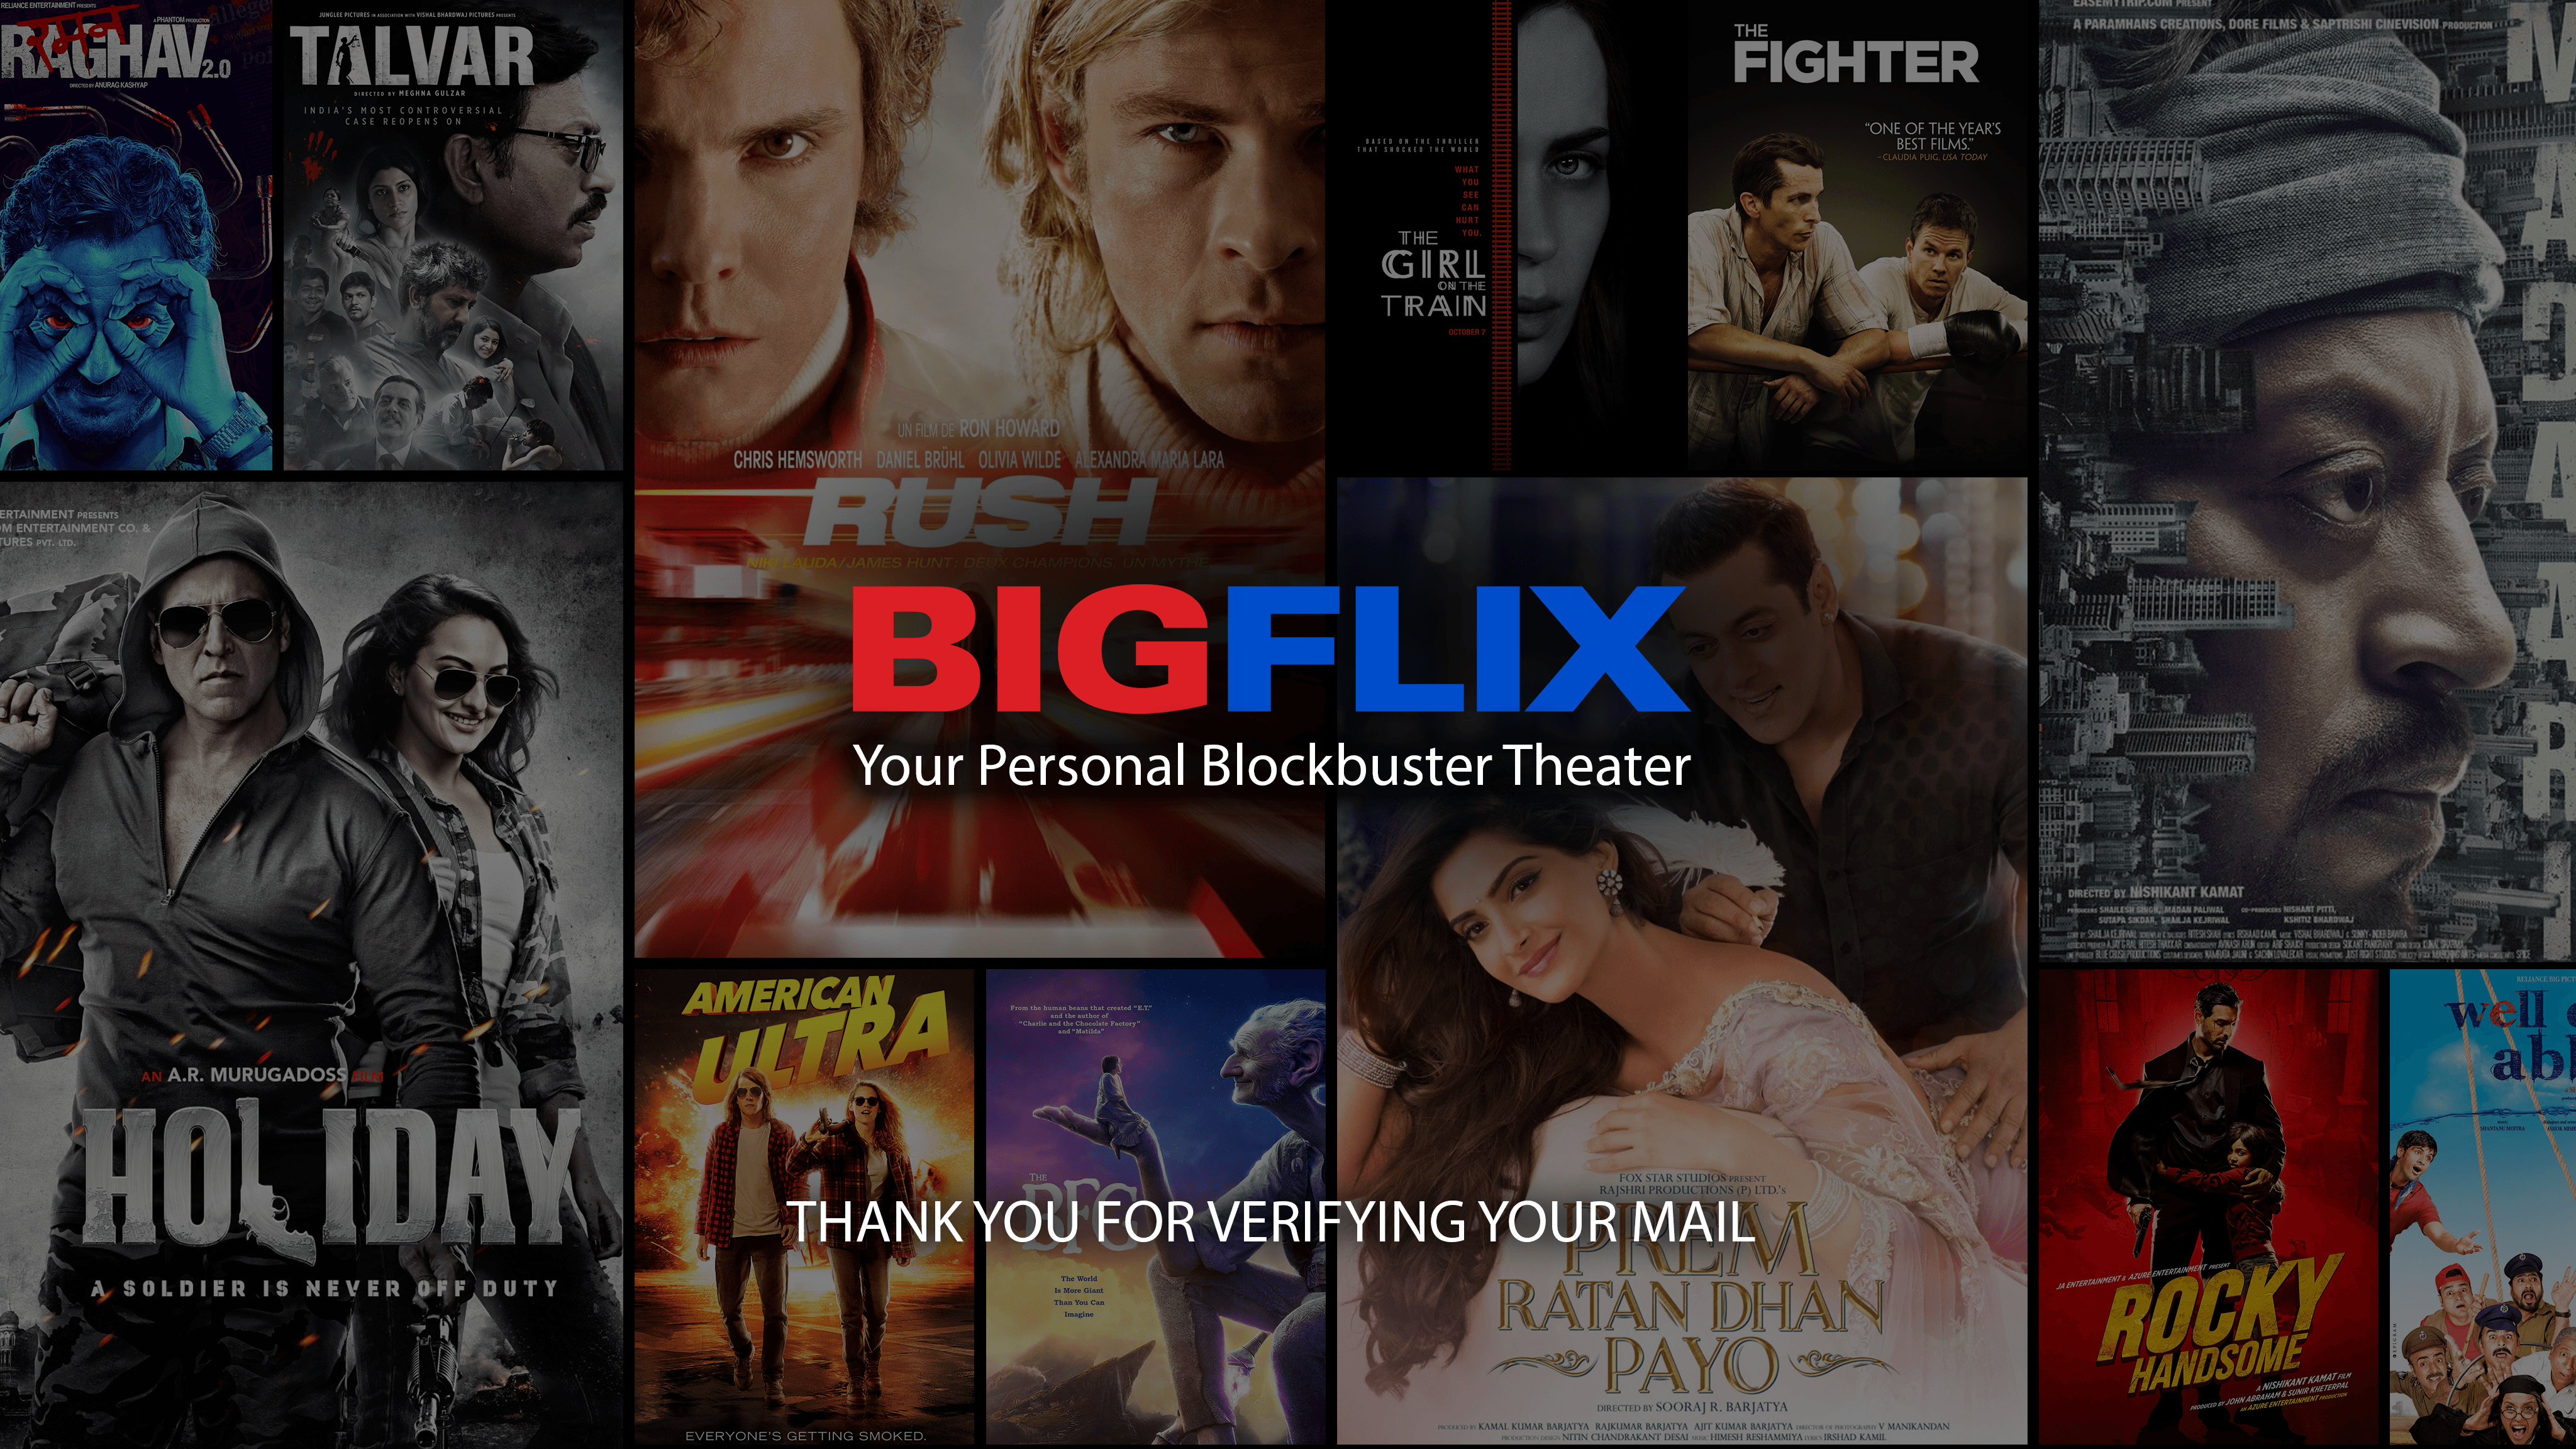 BIGFlix Logo - BIGFLIX Movies Online. Hindi Movies. Tamil Movies. Telugu